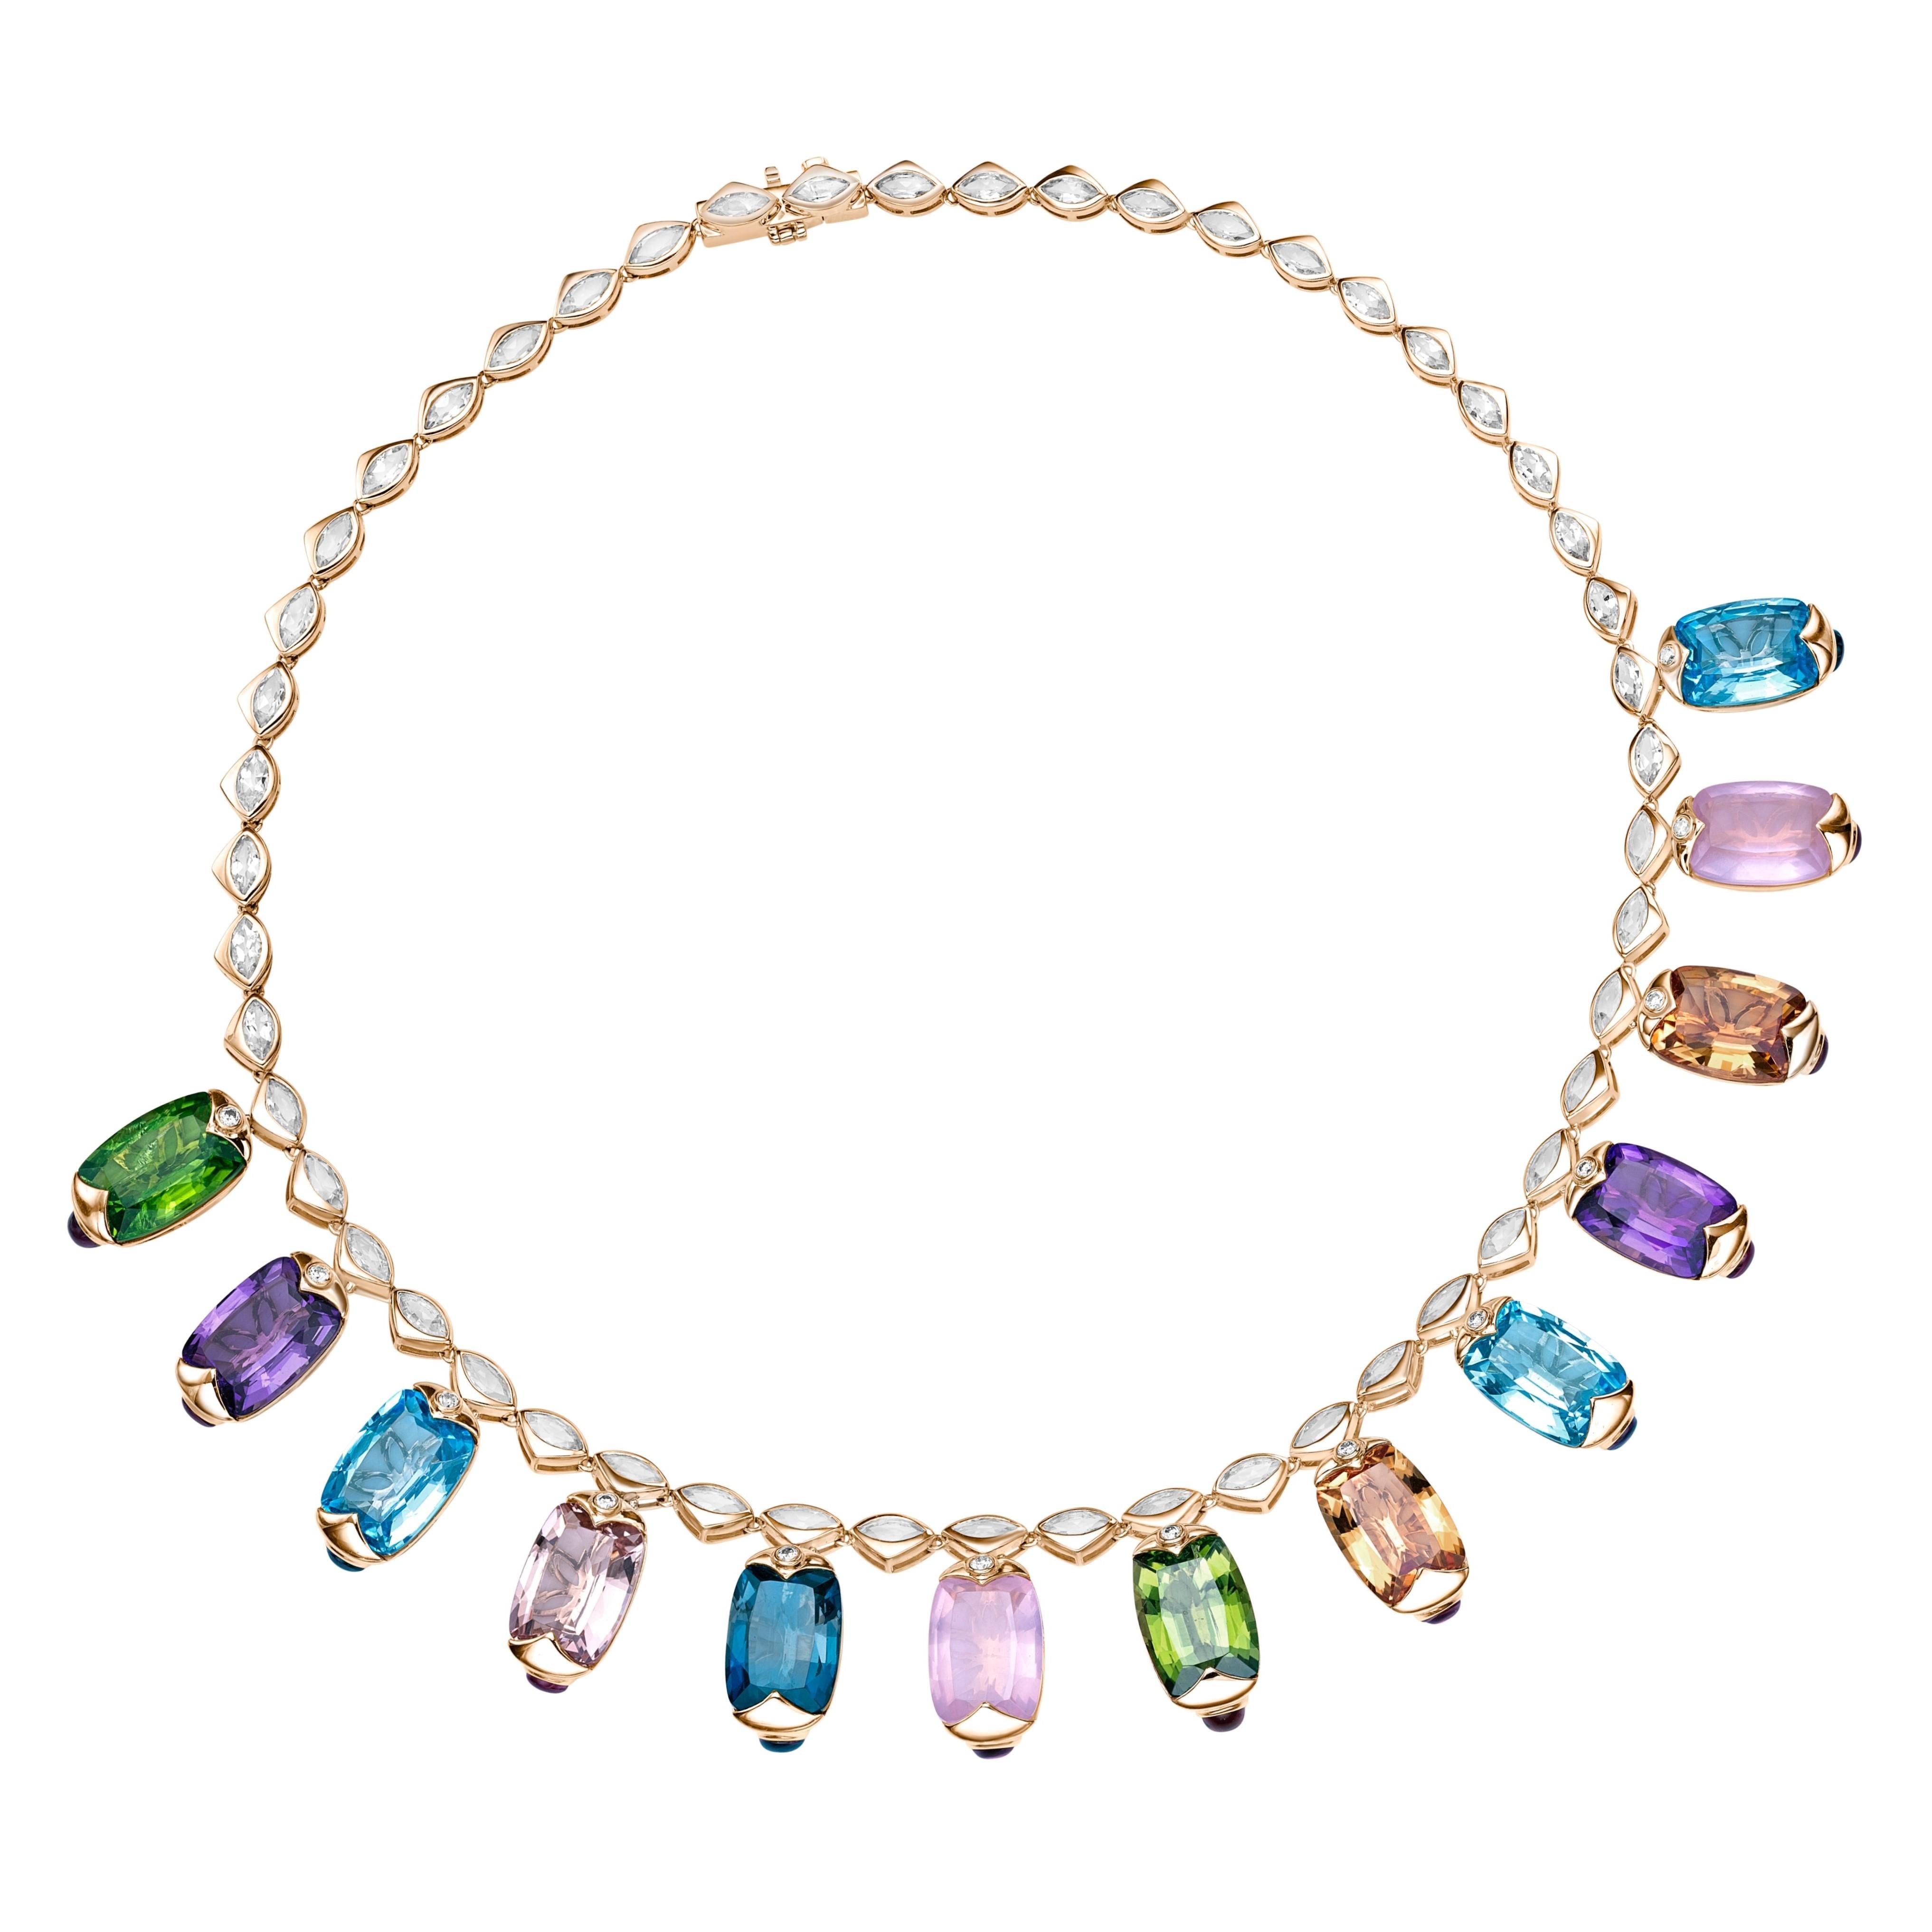 Contemporary 104.04 Carat Multi Gemstone Necklace in 18Karat Yellow Gold with Diamond.